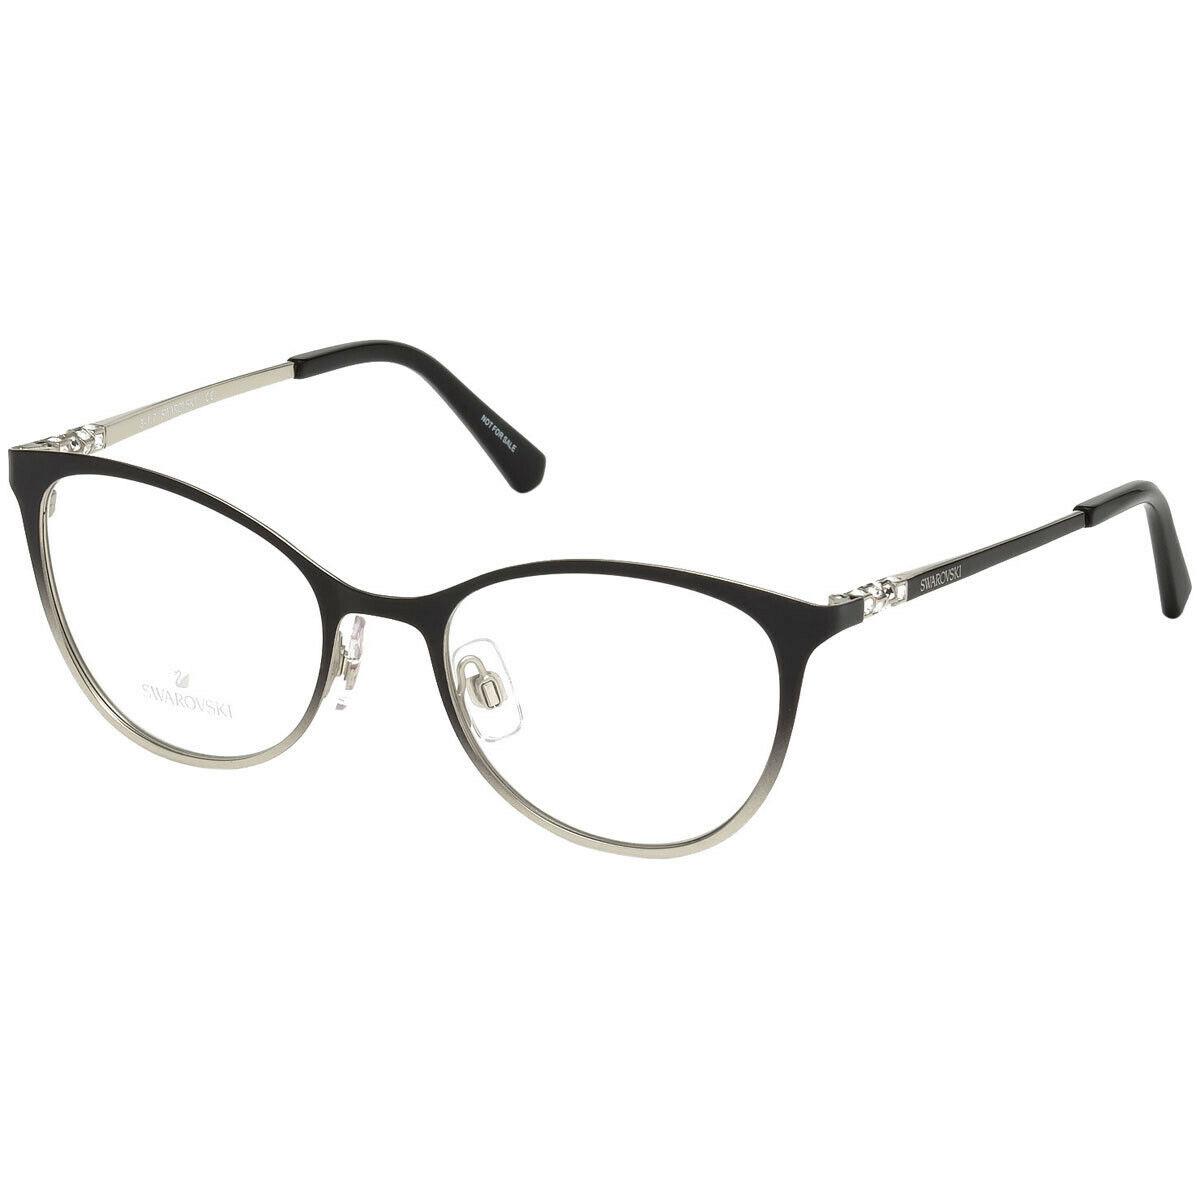 Swarovski SW5248 001 Black Silver Metal Cat Eye Eyeglasses 52-19-140 SK5248